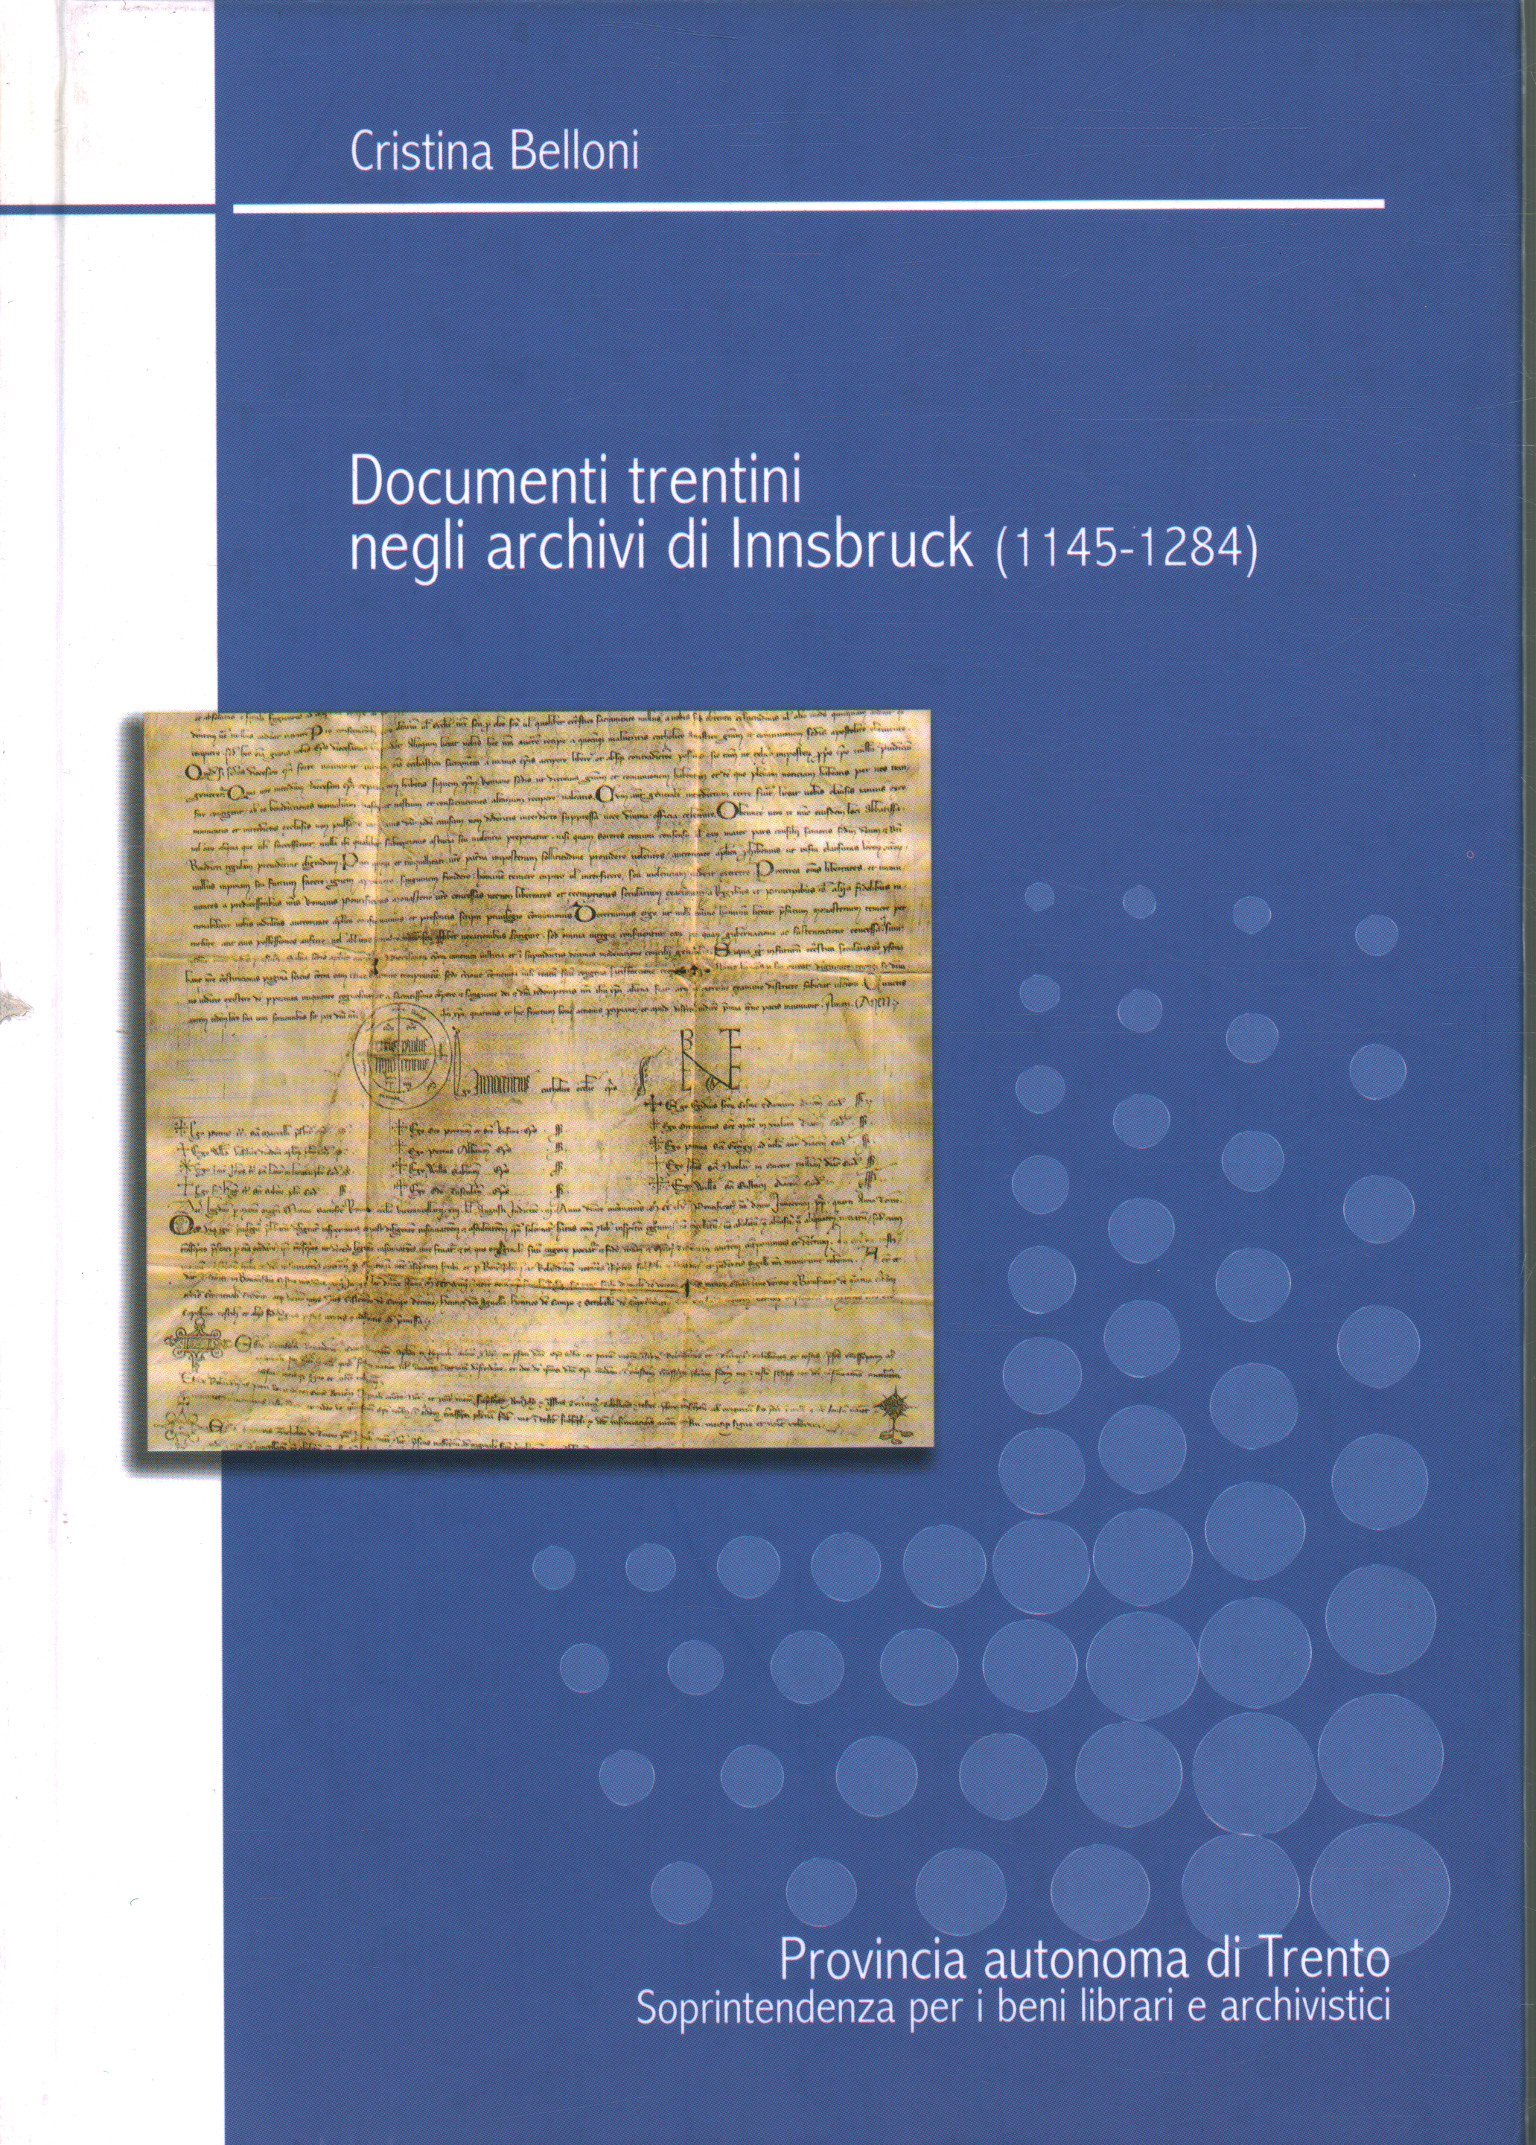 Trentiner Dokumente im Innsbrucker Archiv (114, Cristina Belloni